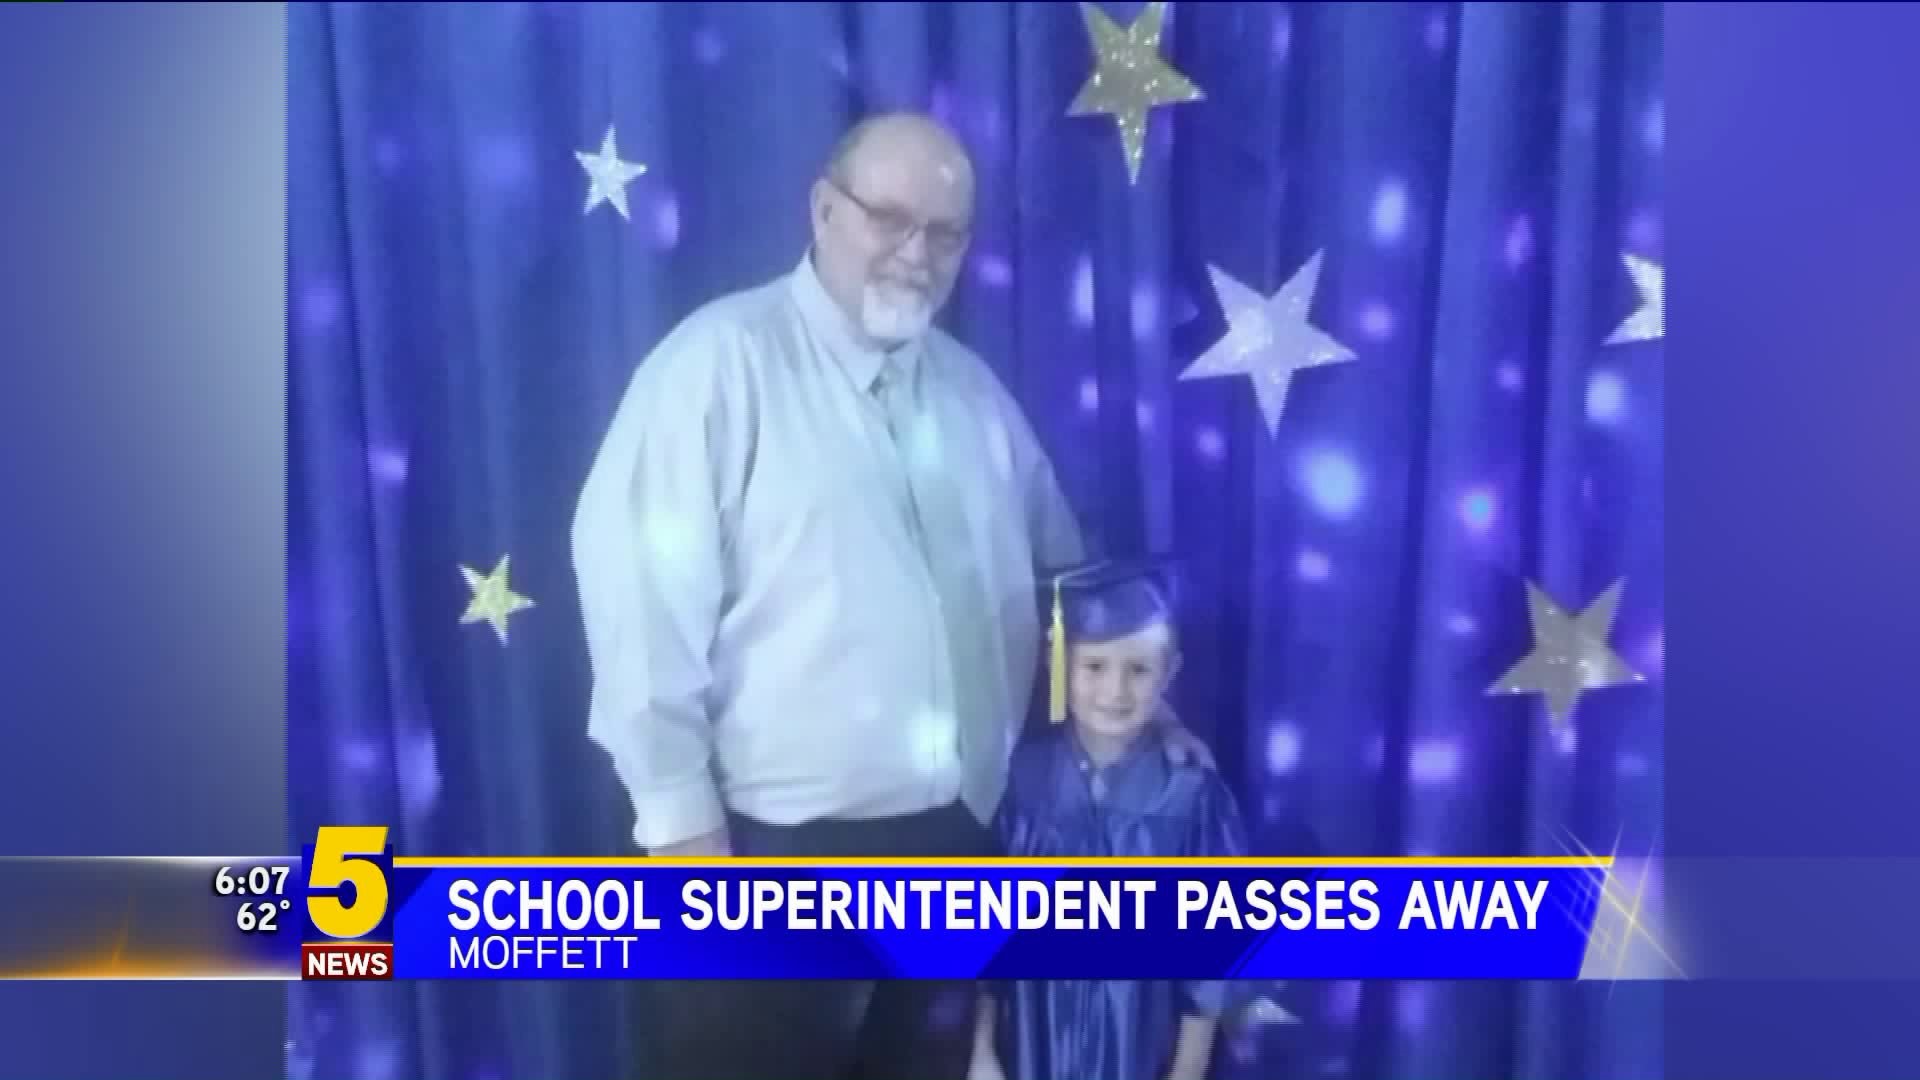 School Superintendent Passes Away in Moffett